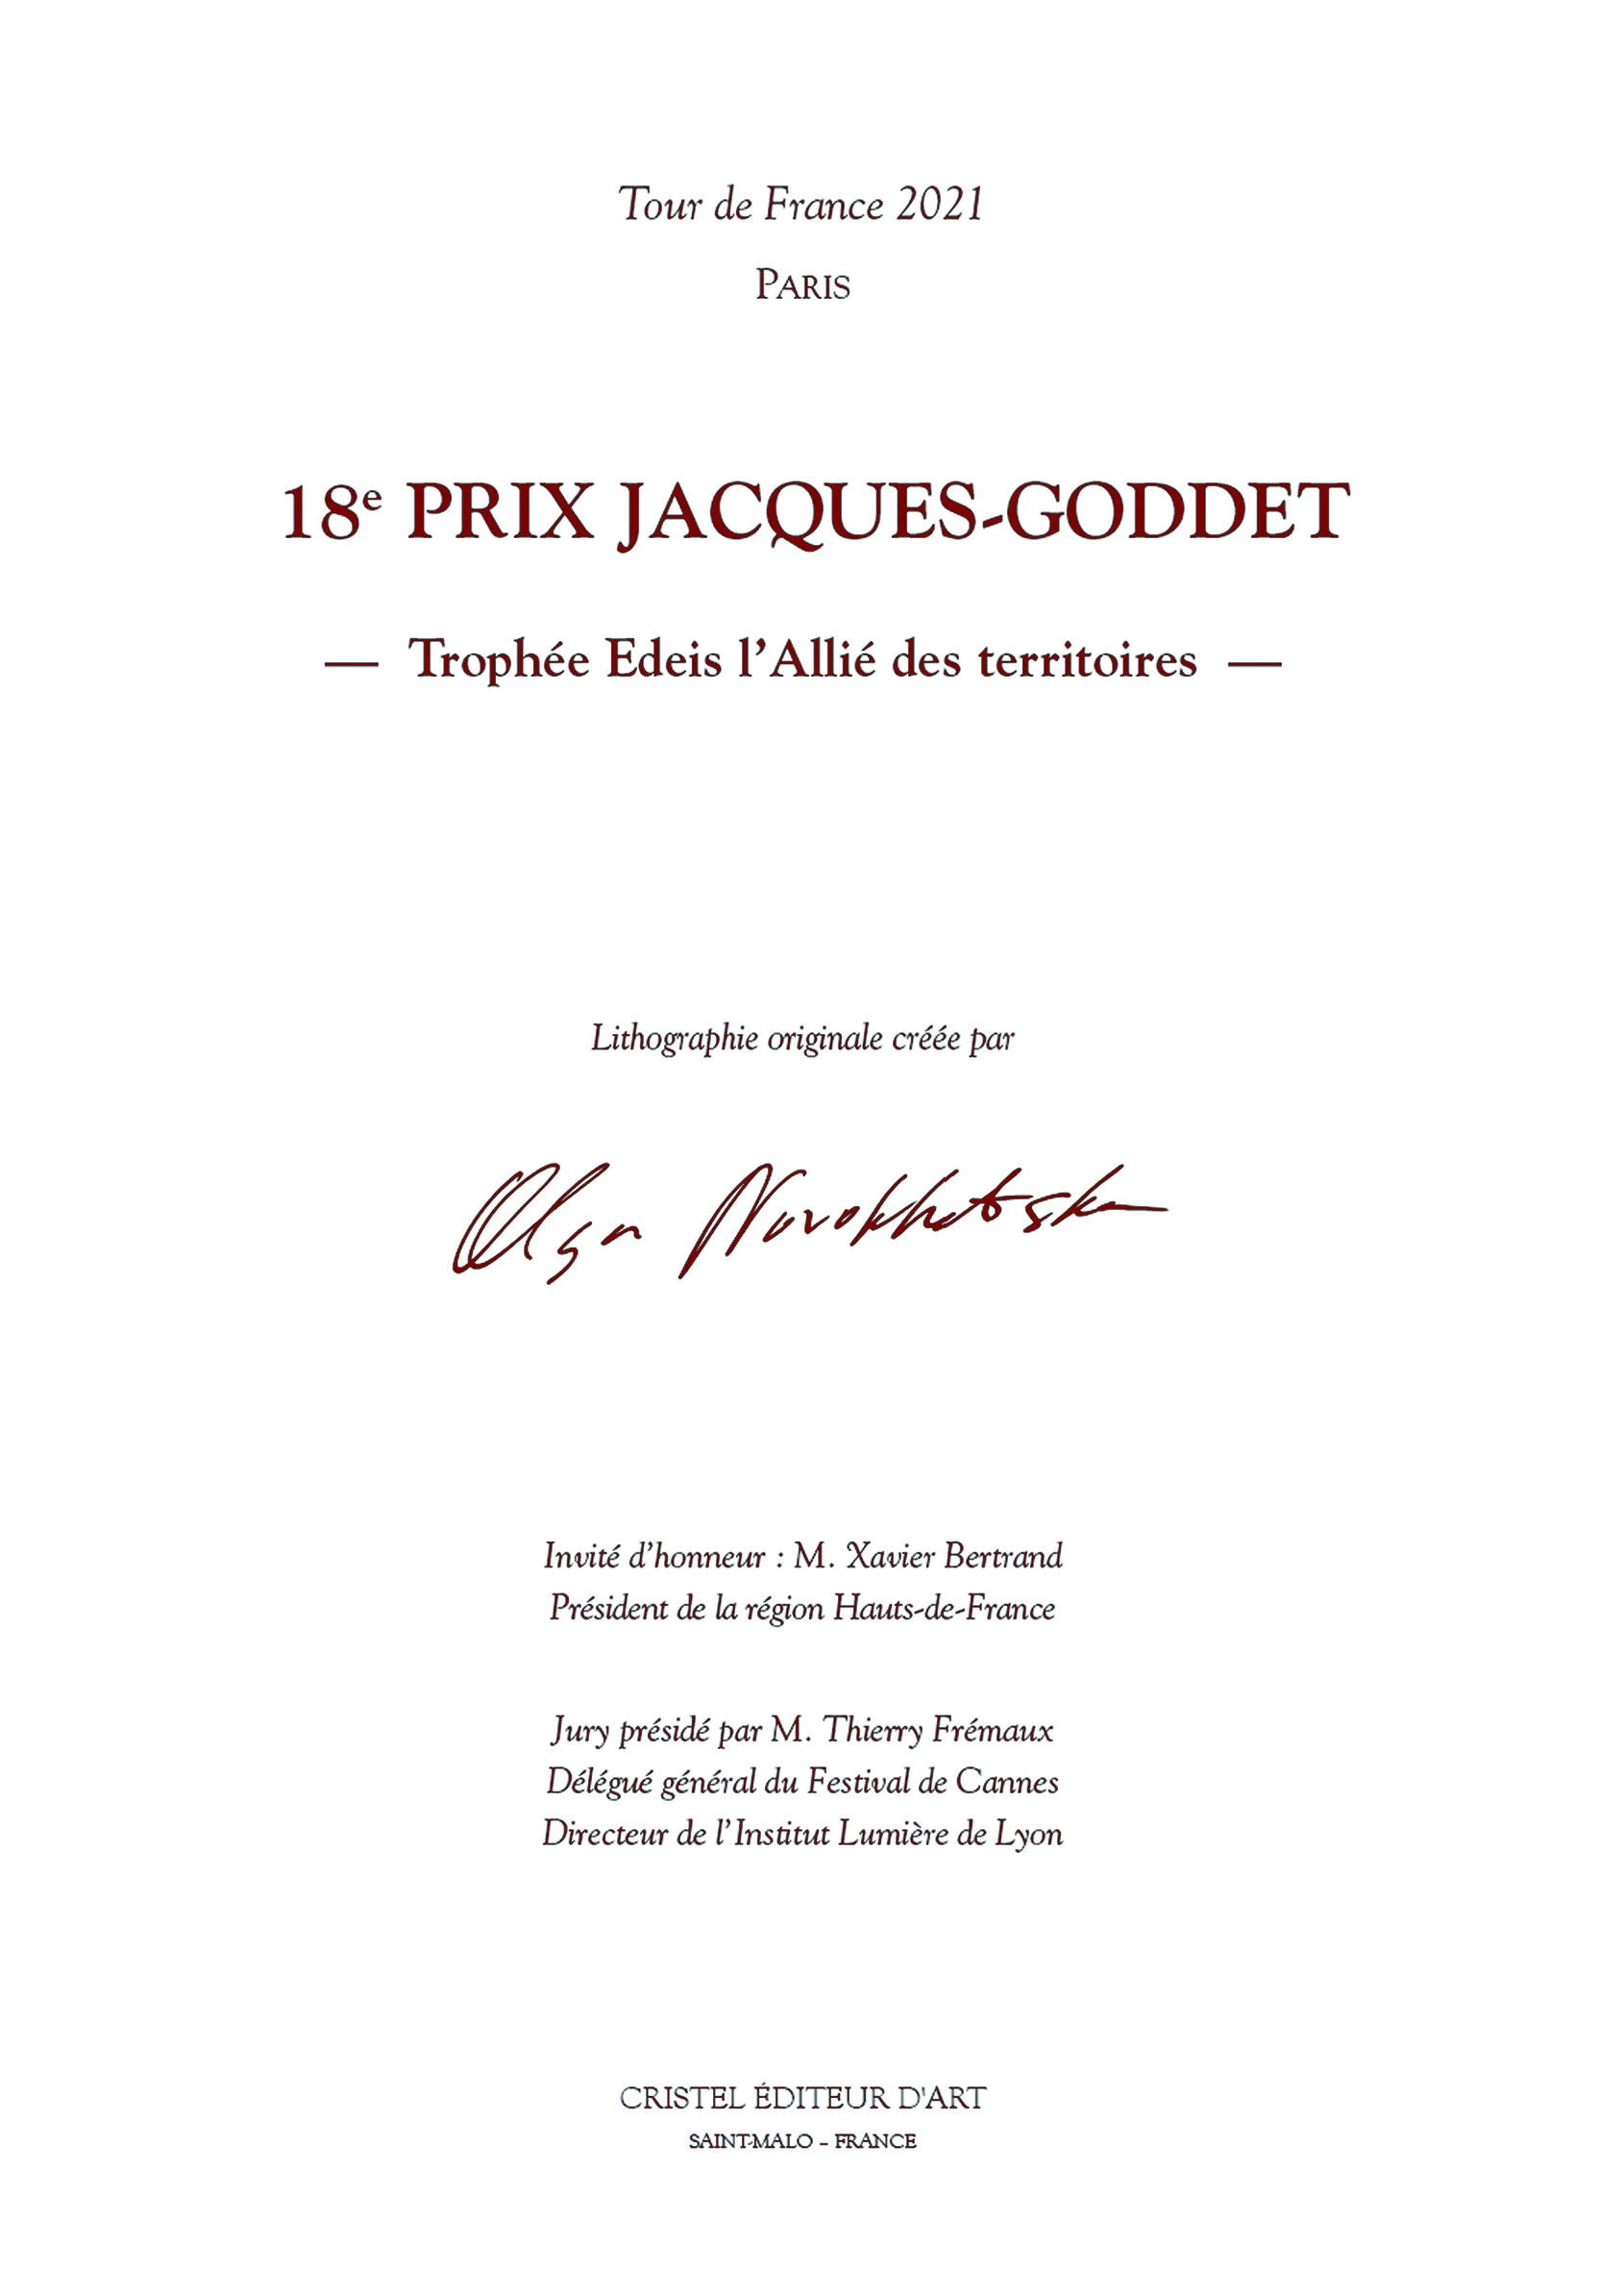 Portfolio 18e Prix Jacques-Goddet Tour de France